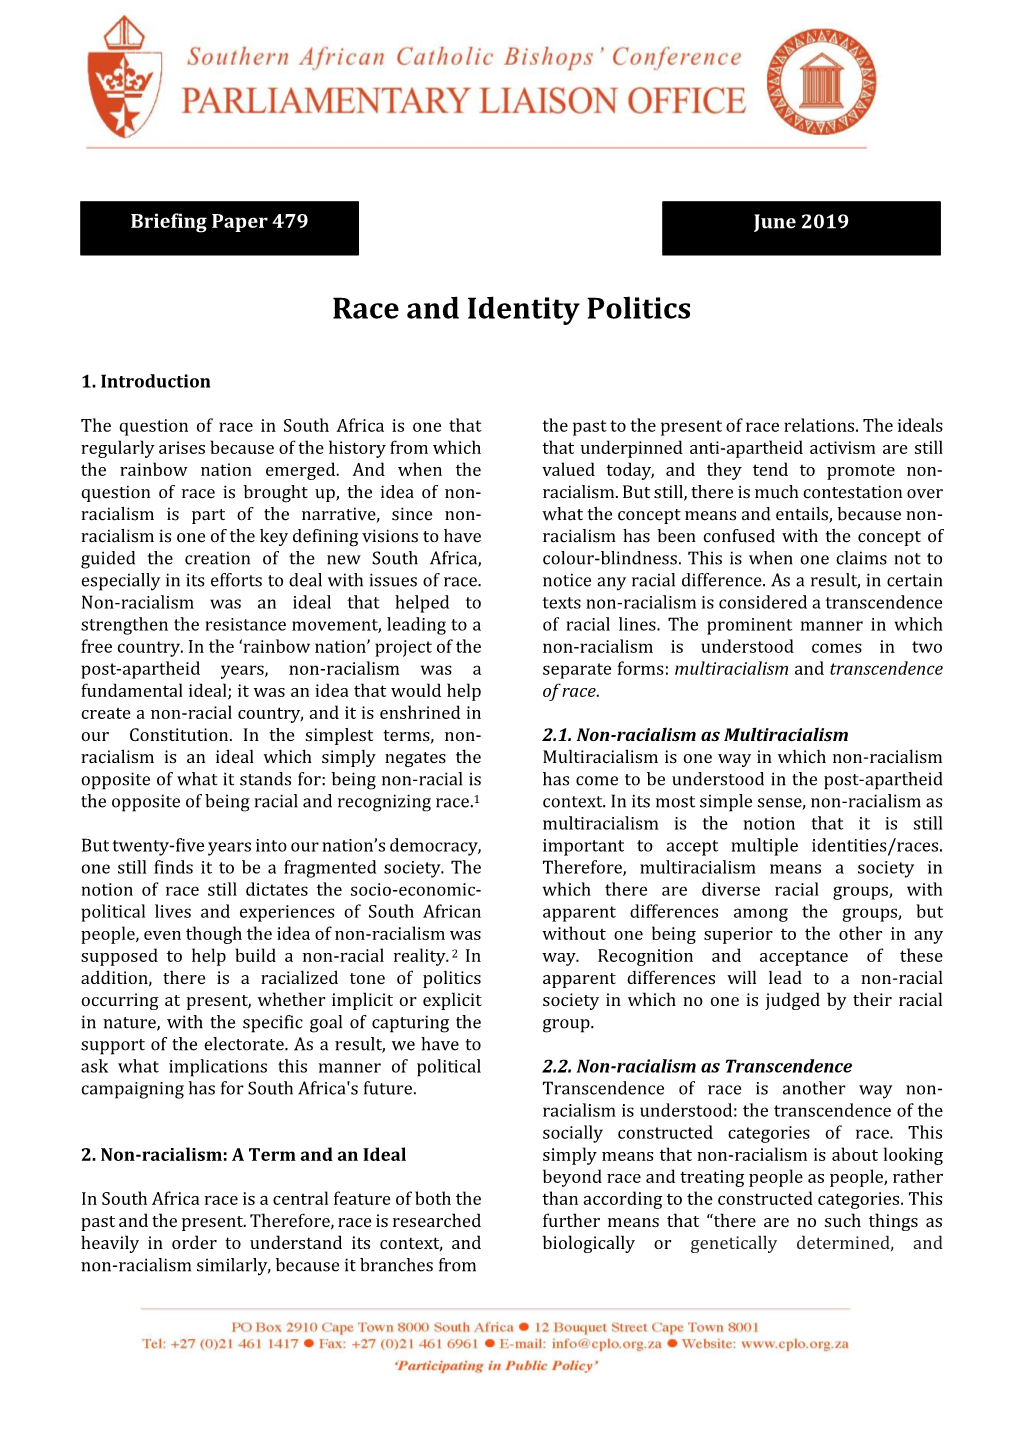 BP 479 Race and Identity Politics